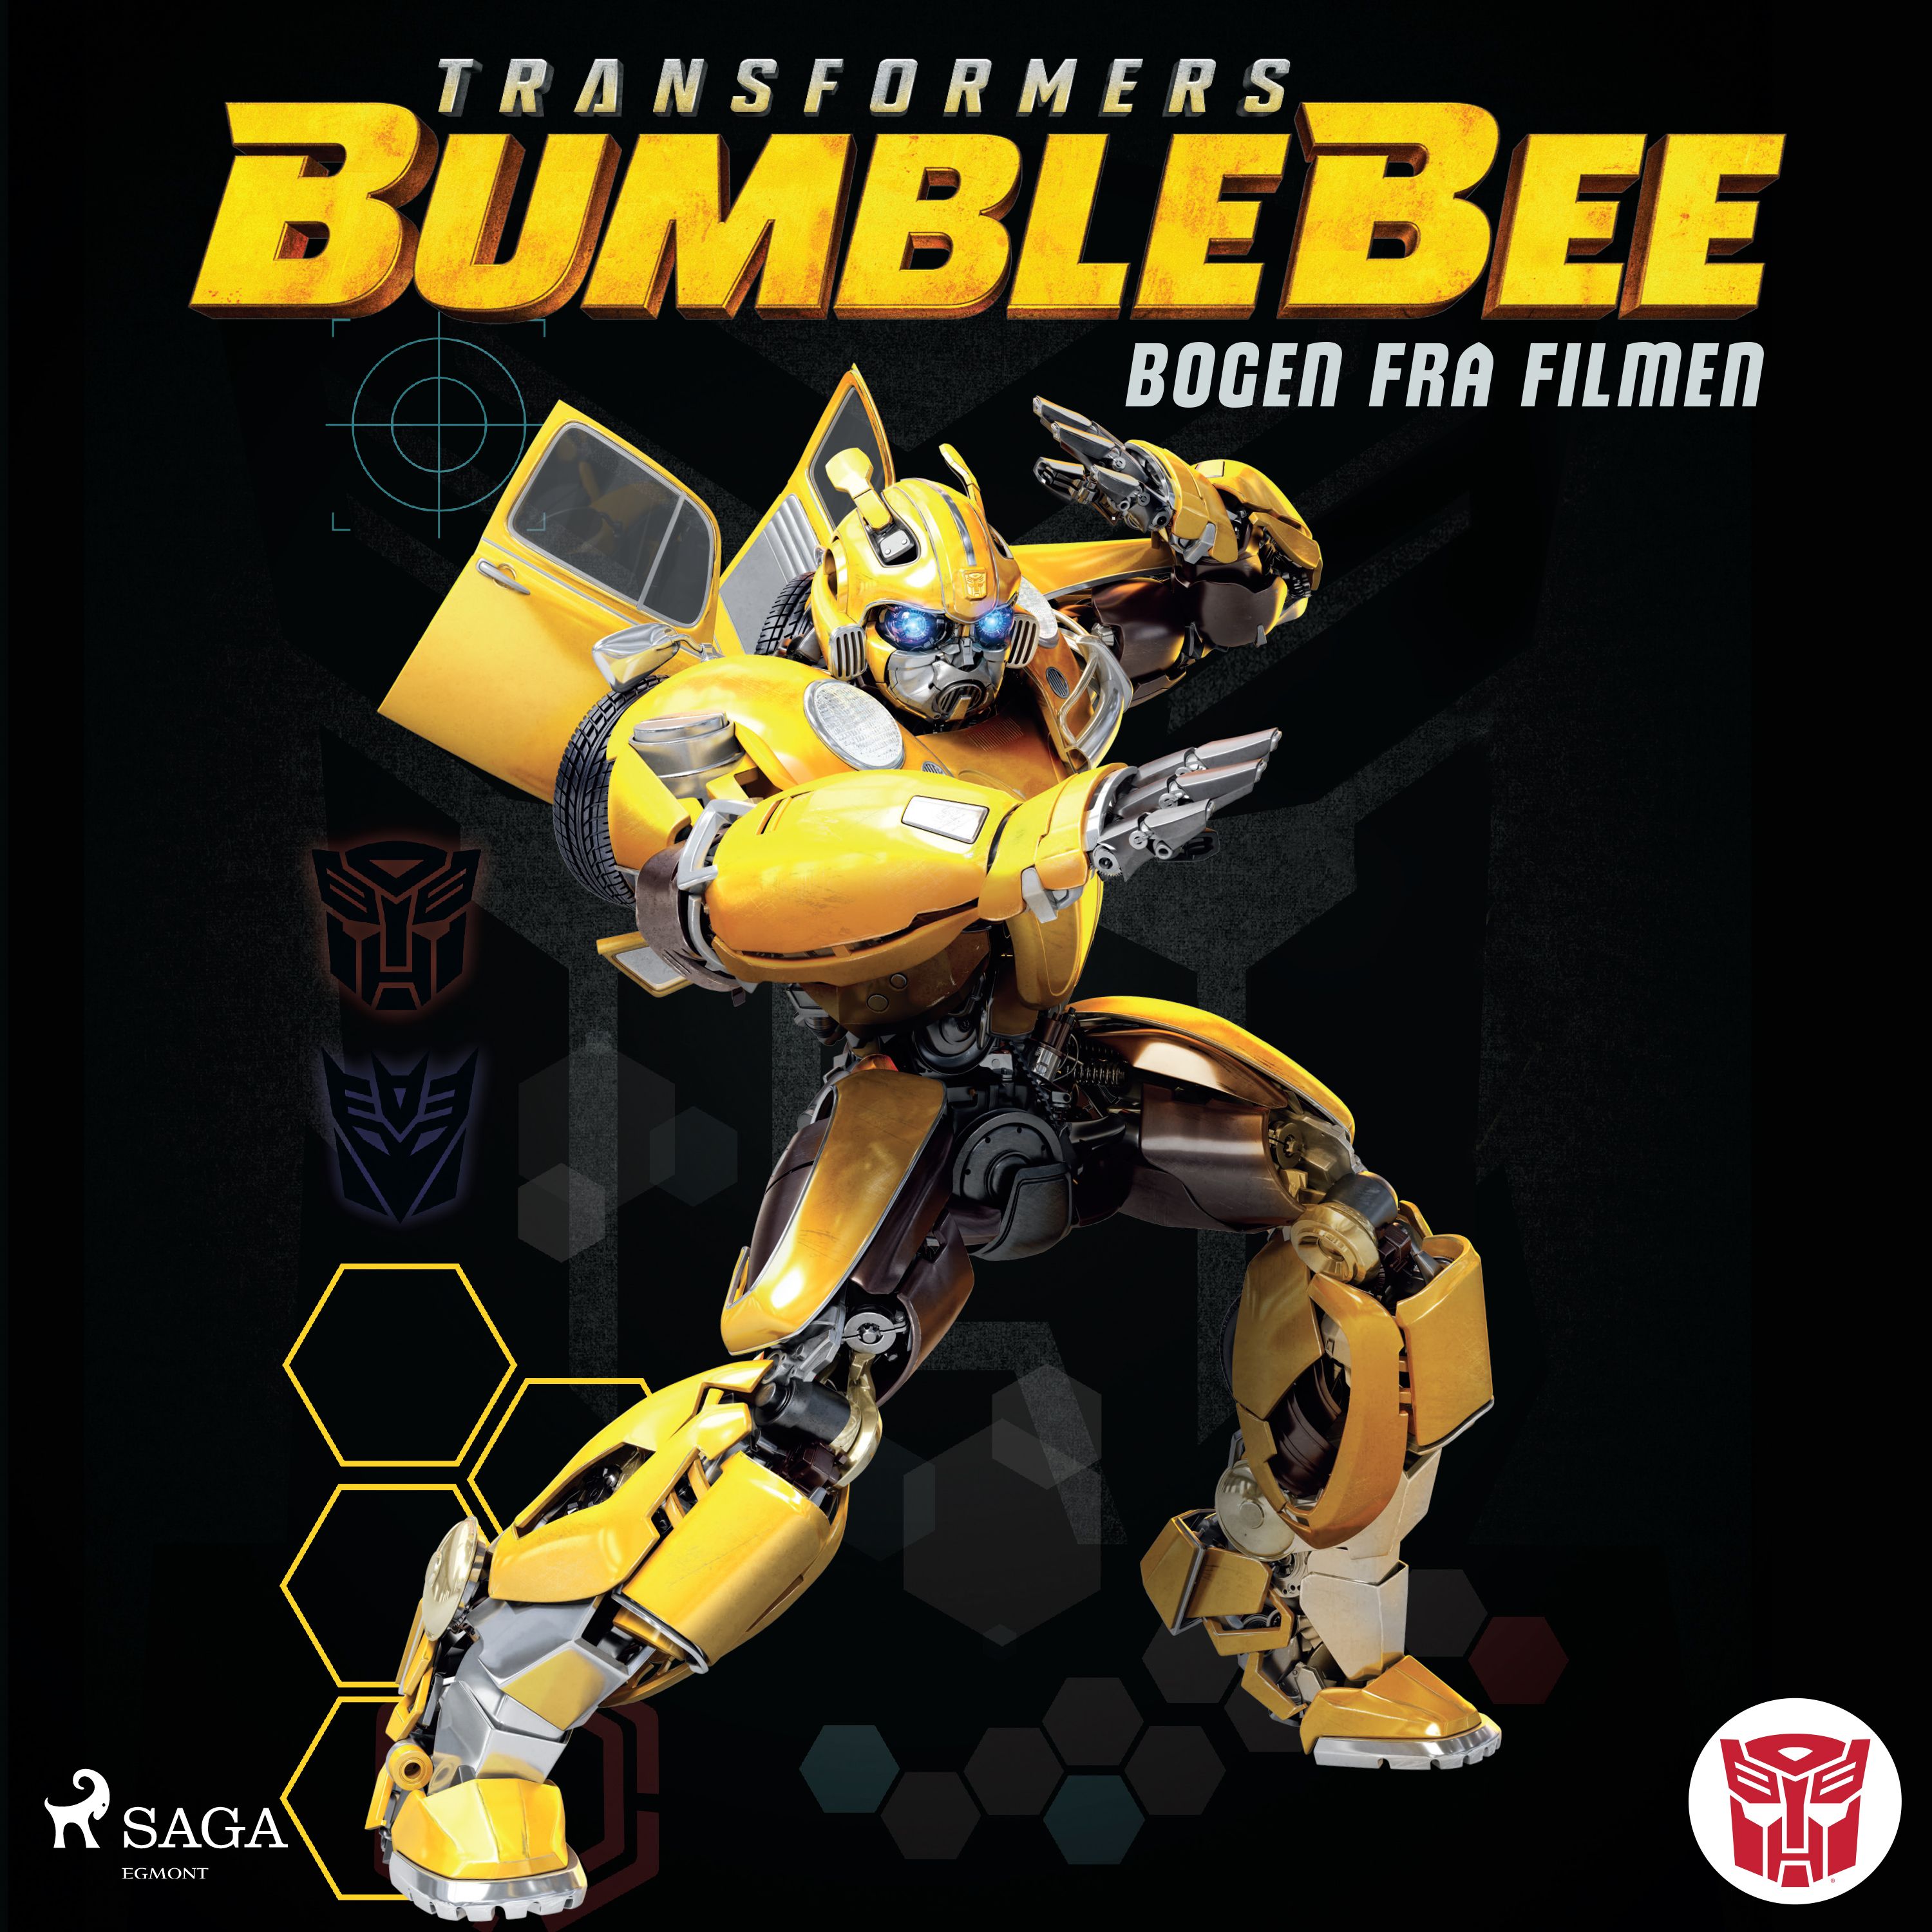 Transformers - Bumblebee, ljudbok av Ryder Windham